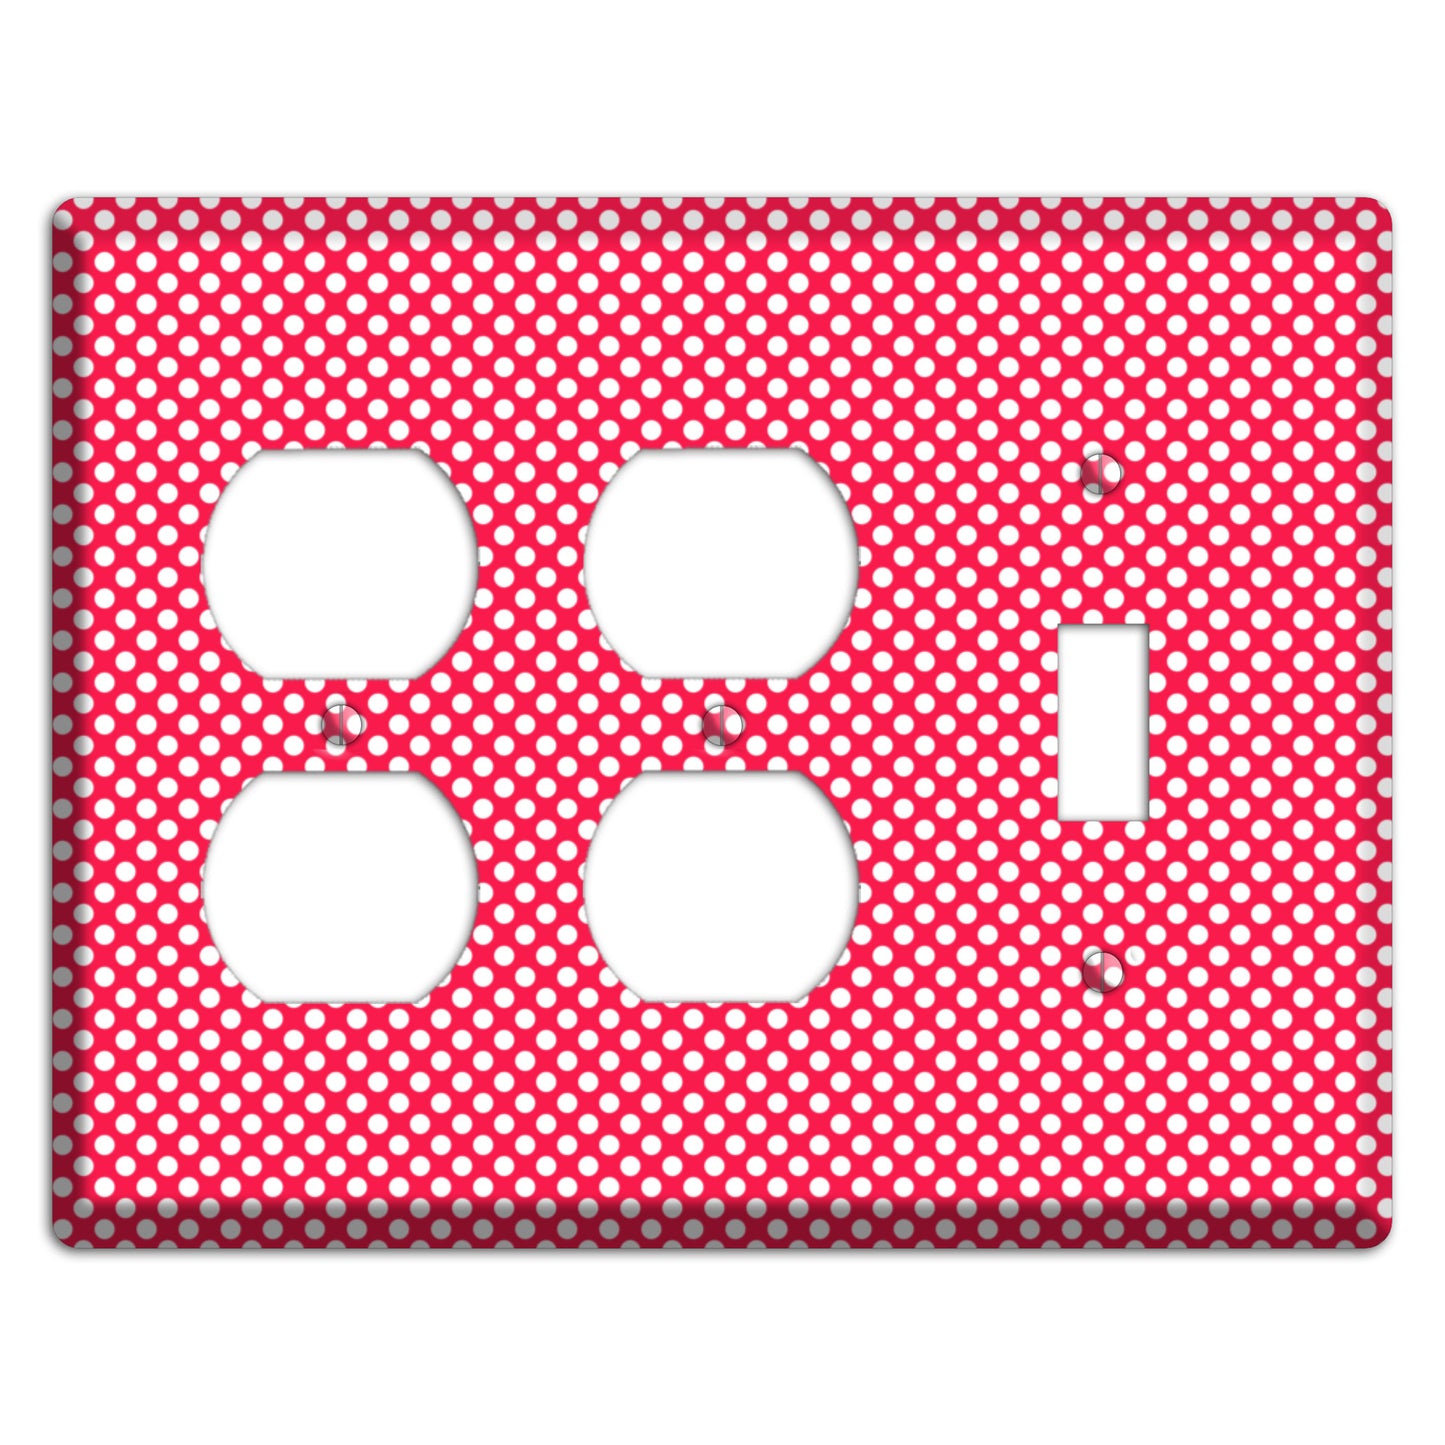 Fuschia with Pink Tiny Polka Dots 2 Duplex / Toggle Wallplate